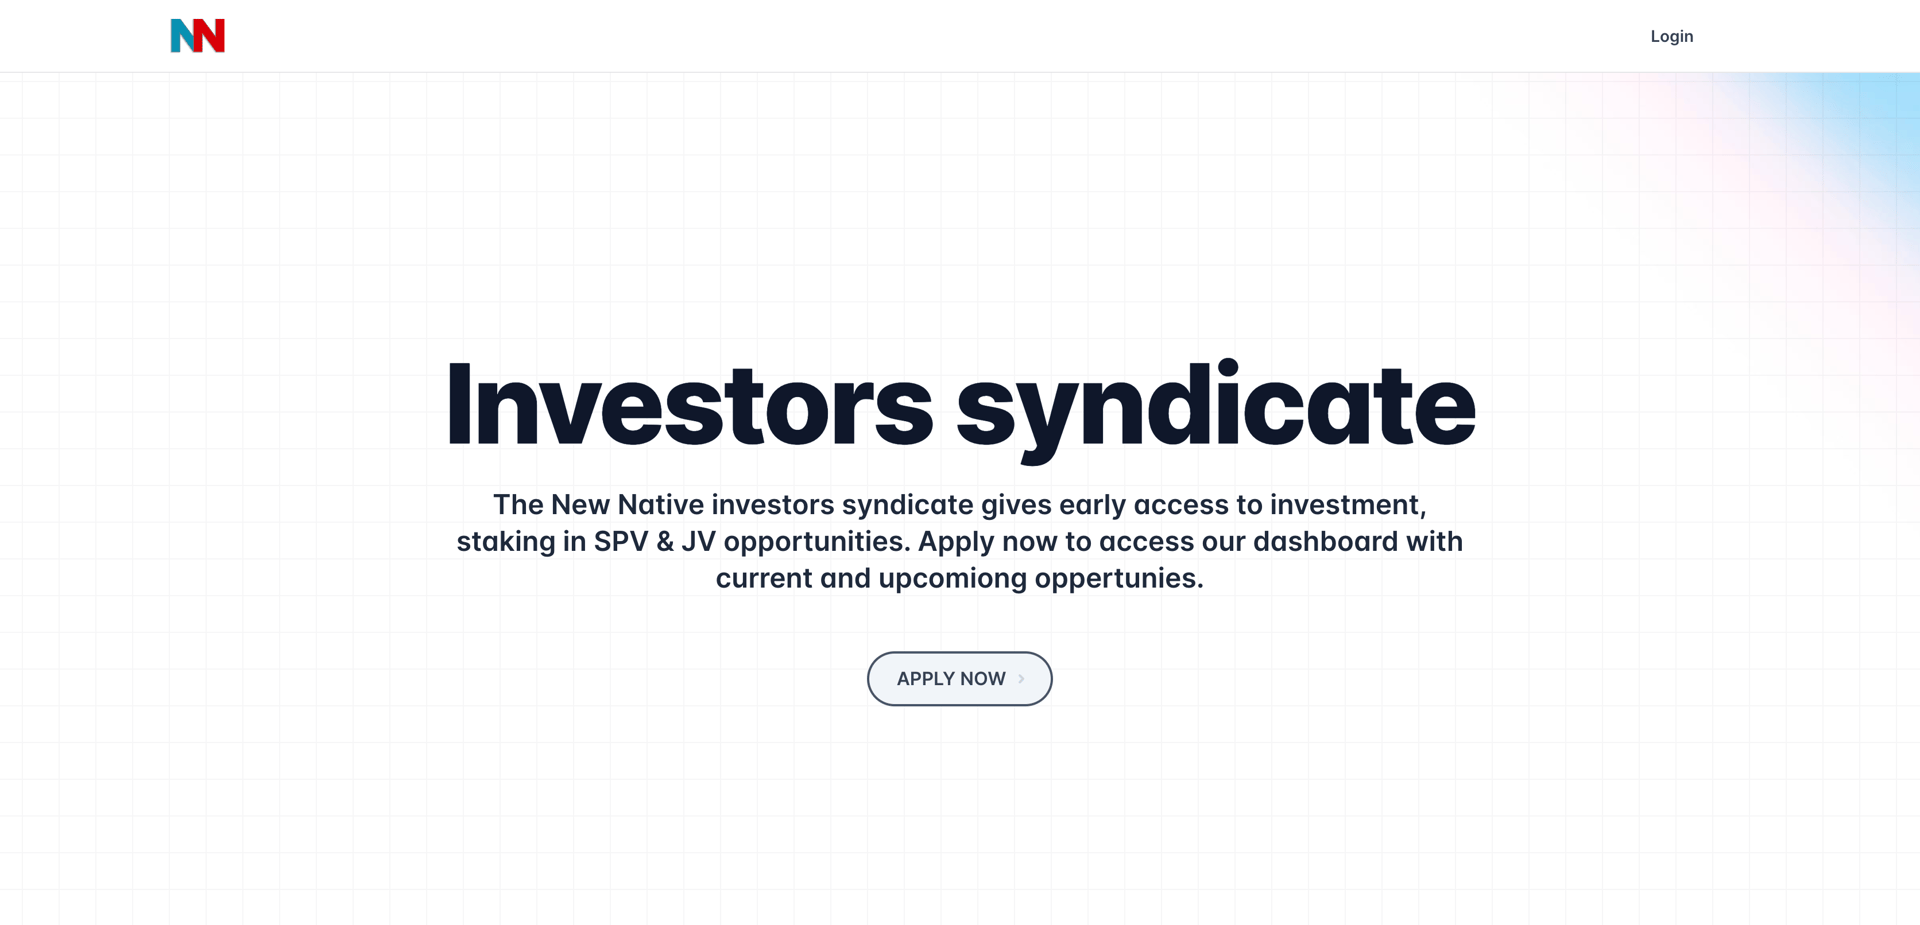 New Native launches new investor portal